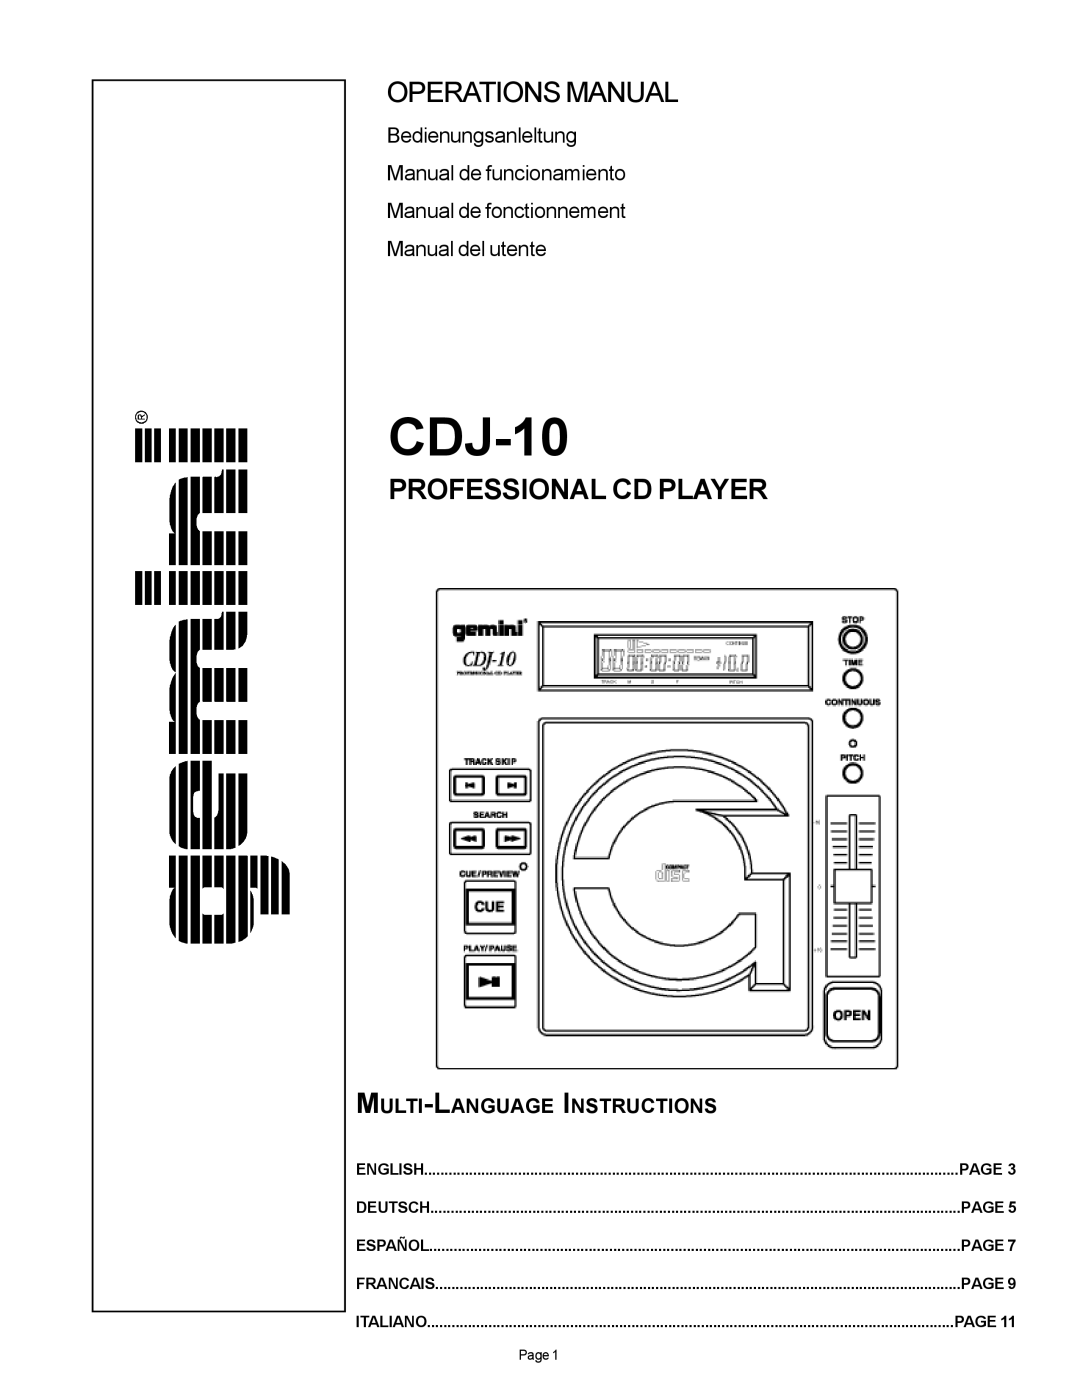 Gemini CDJ-10 manual Operations Manual, Professional Cd Player, Bedienungsanleltung Manual de funcionamiento, English 